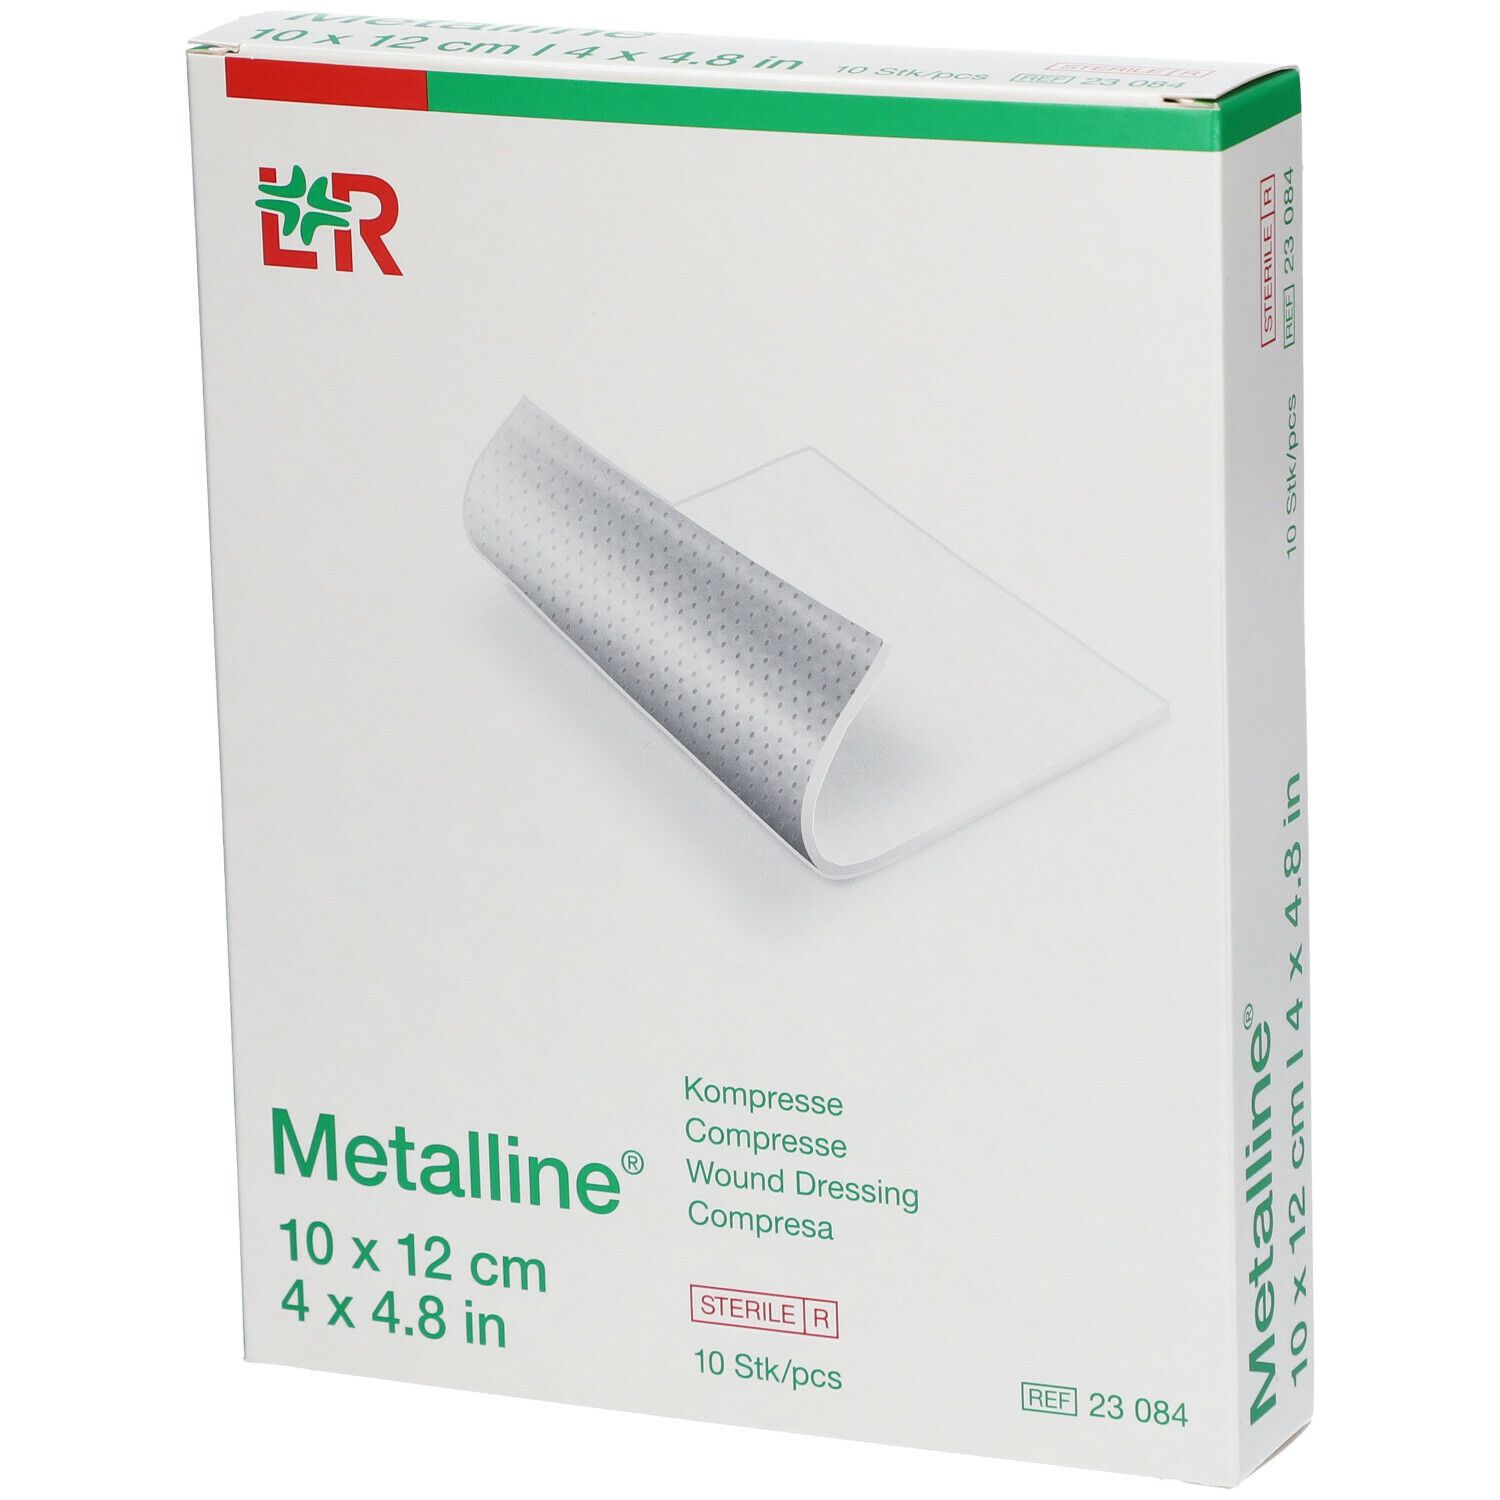 Metalline Compresse Steril 10 x 12cm 23084